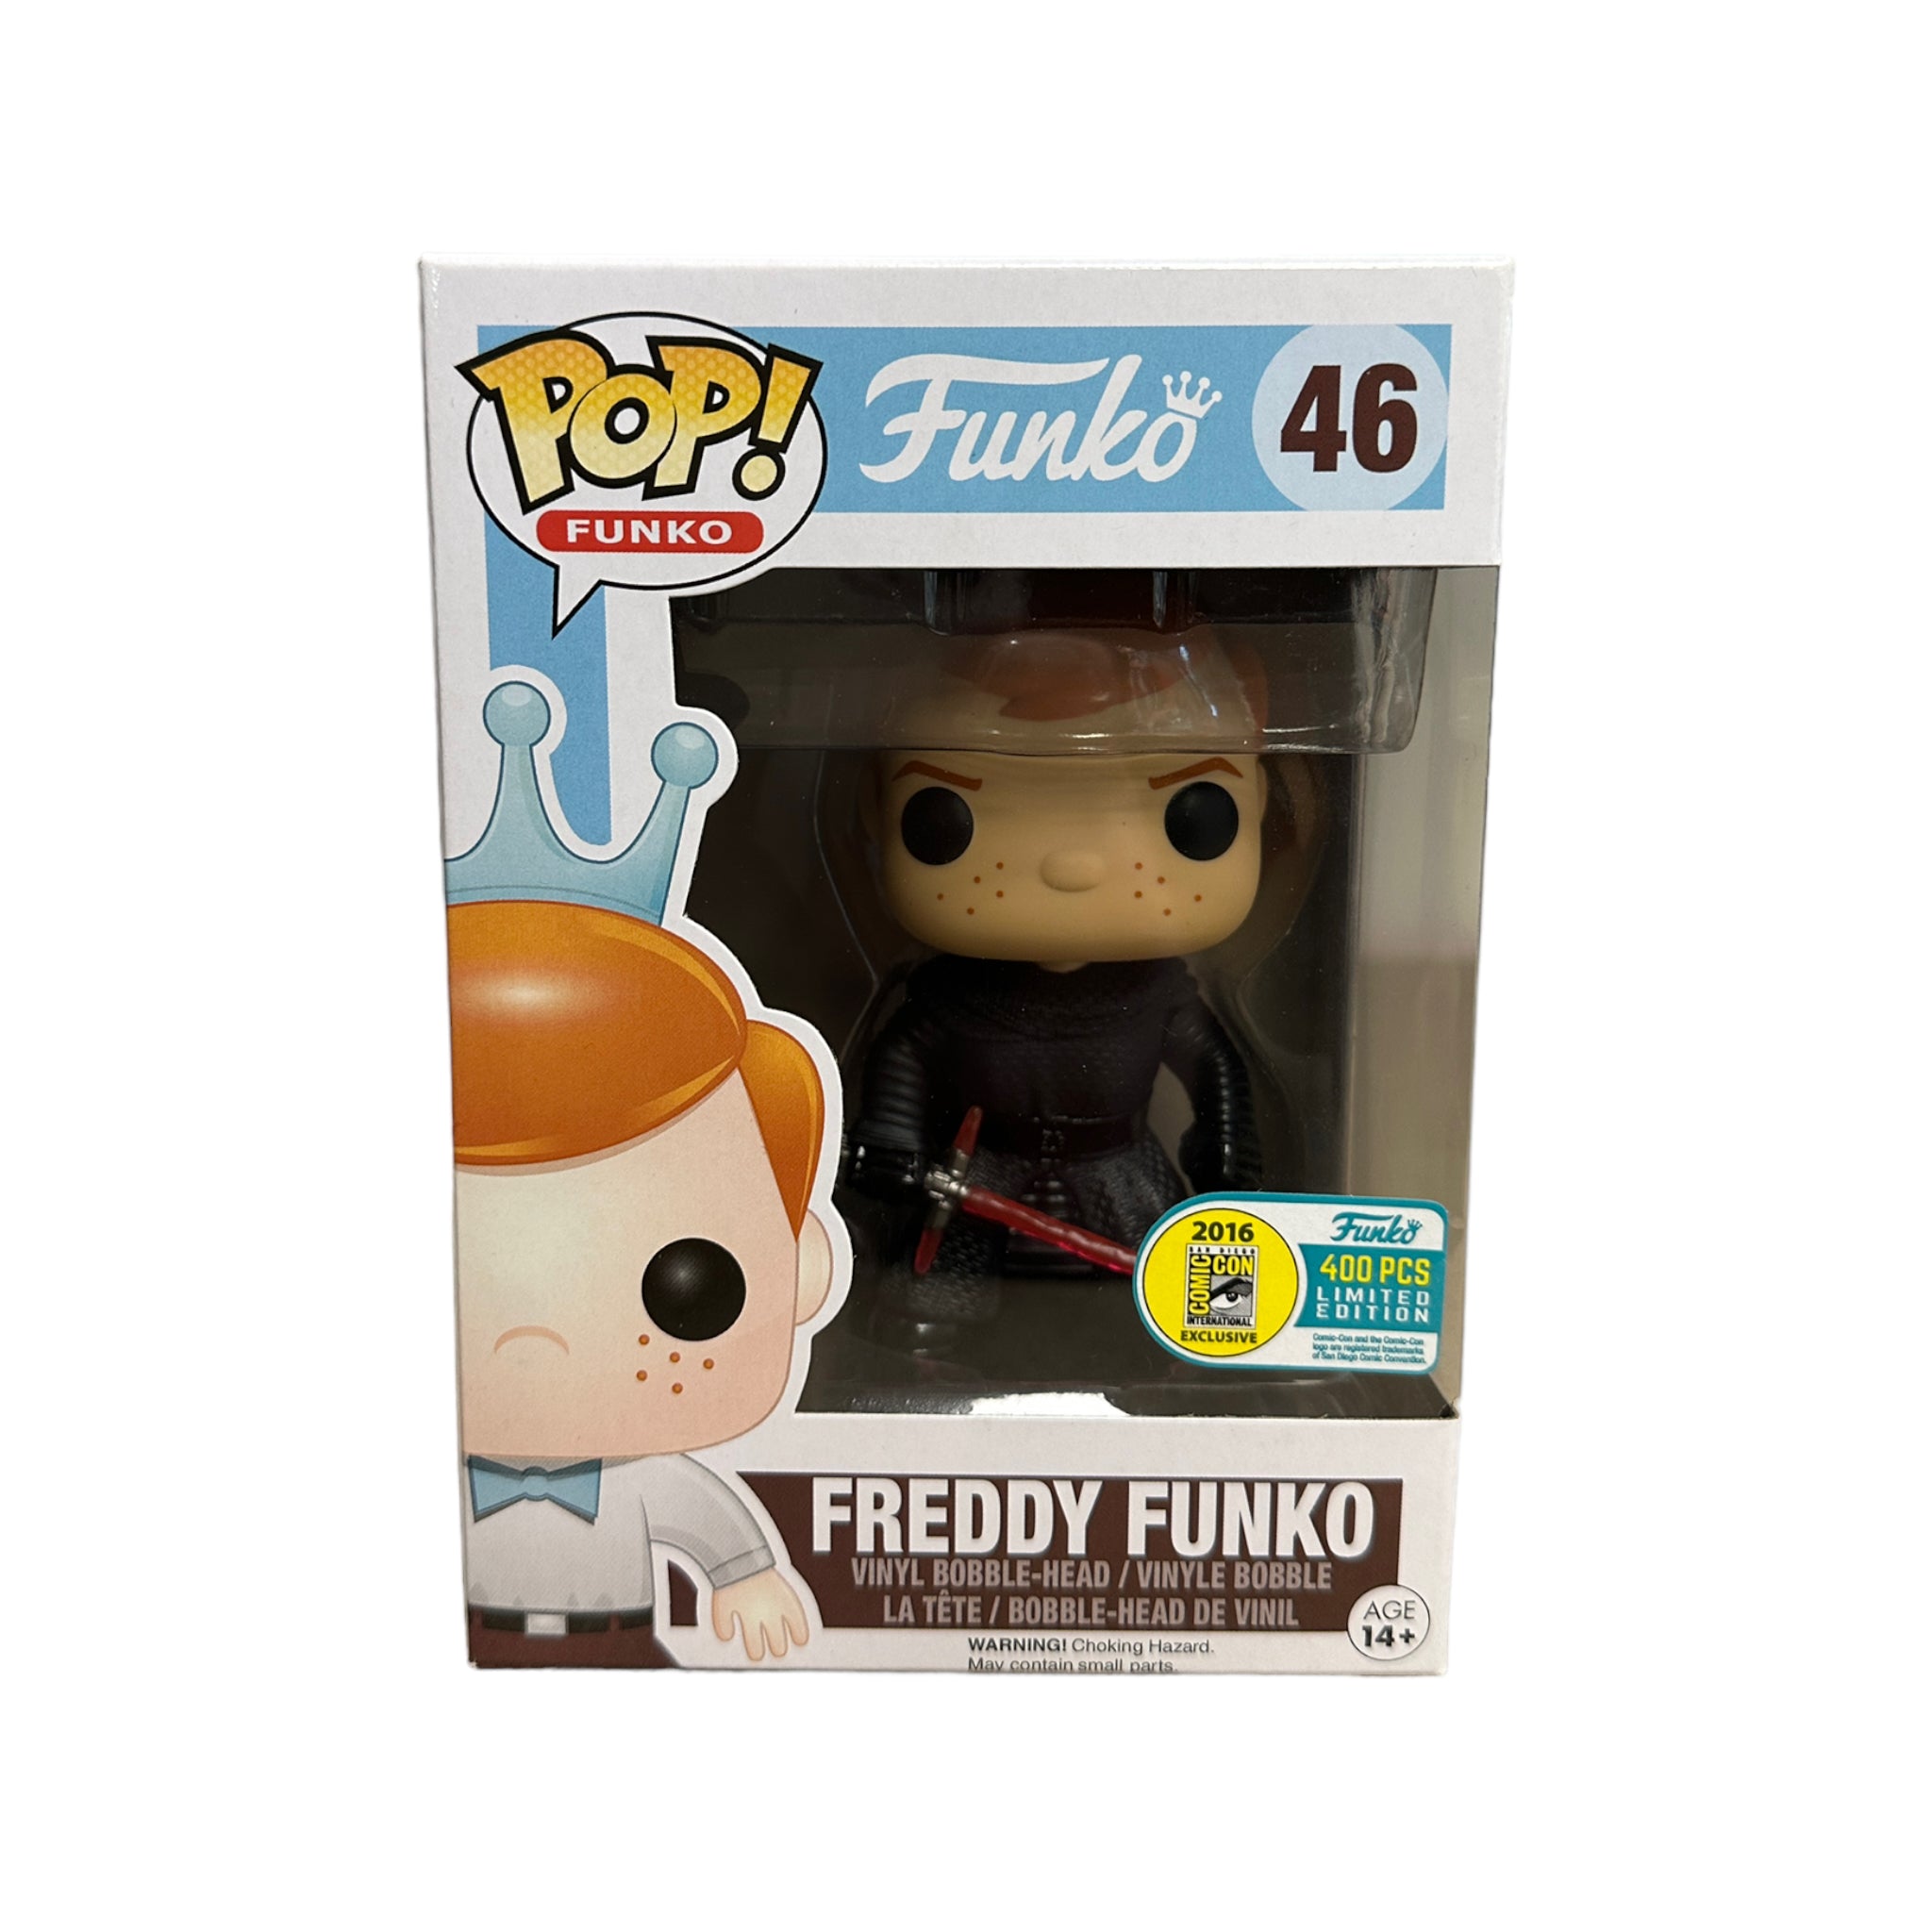 Freddy Funko as Kylo Ren #46 Funko Pop! - Star Wars - SDCC 2016 Exclusive LE400 Pcs - Condition 8.5/10